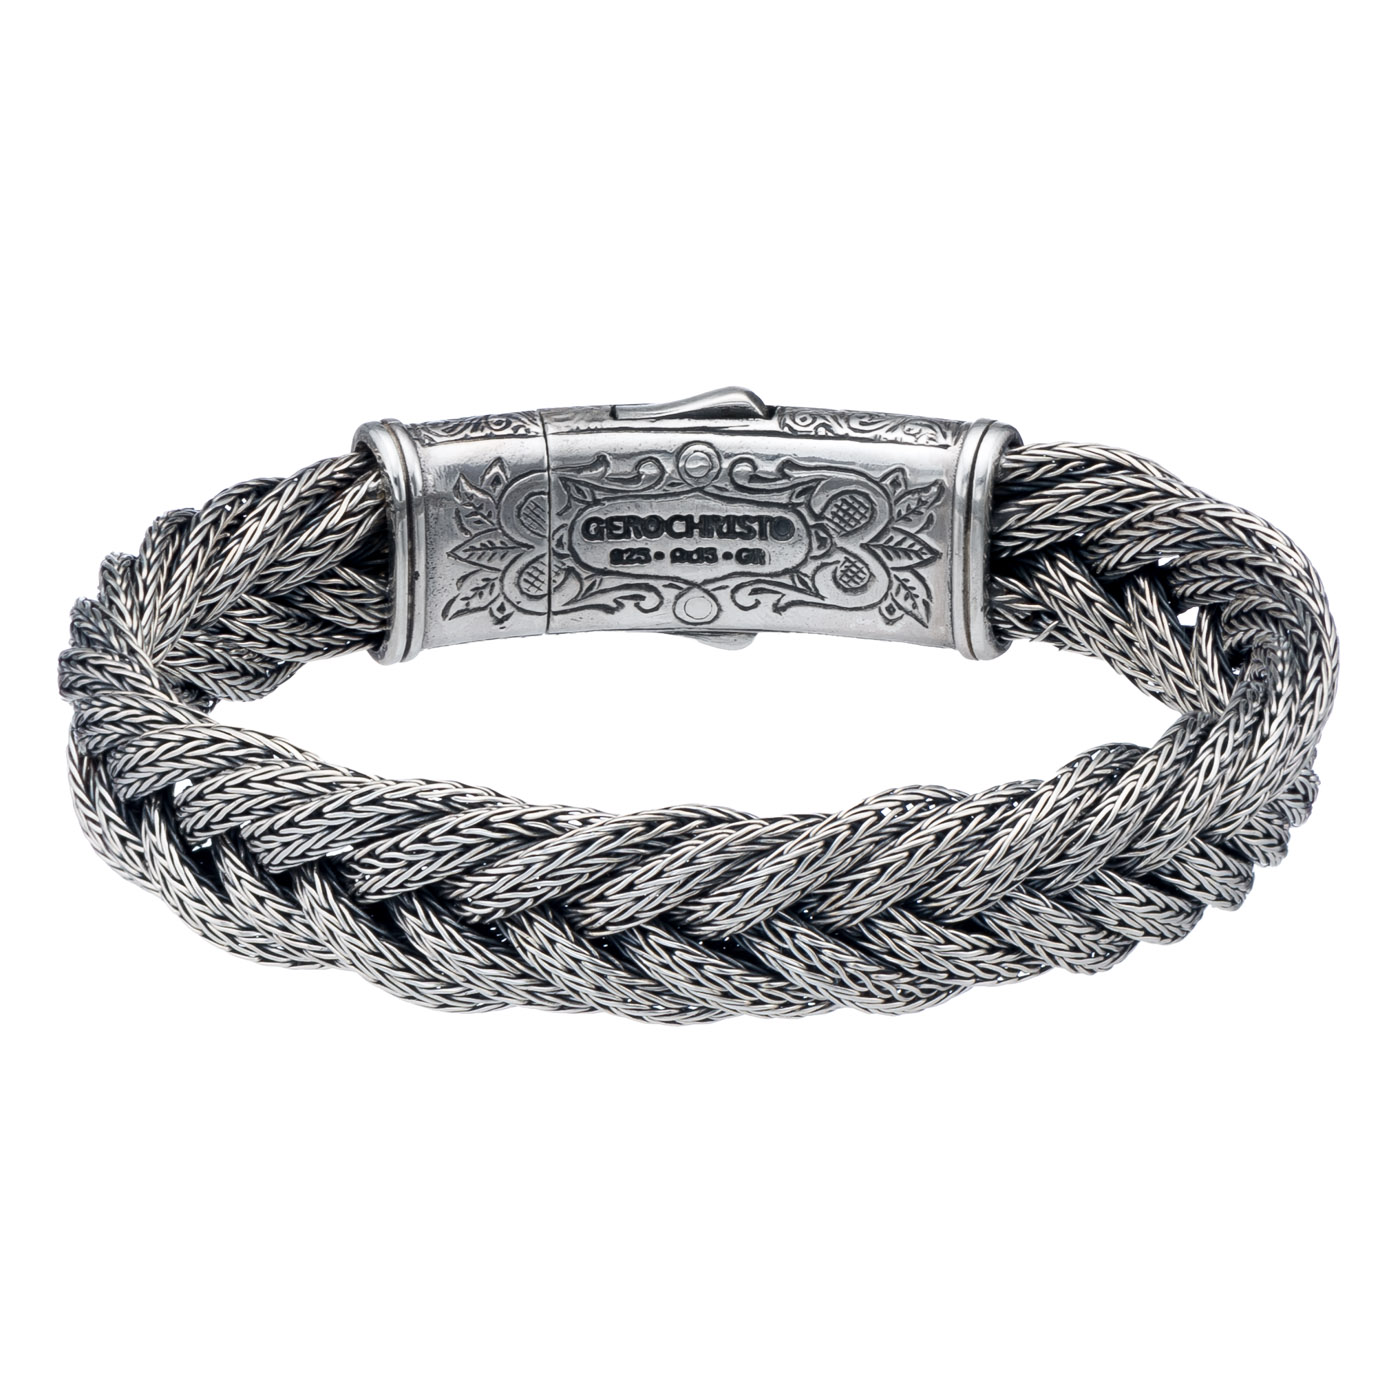 Minoas Braid chain Bracelet in Sterling silver